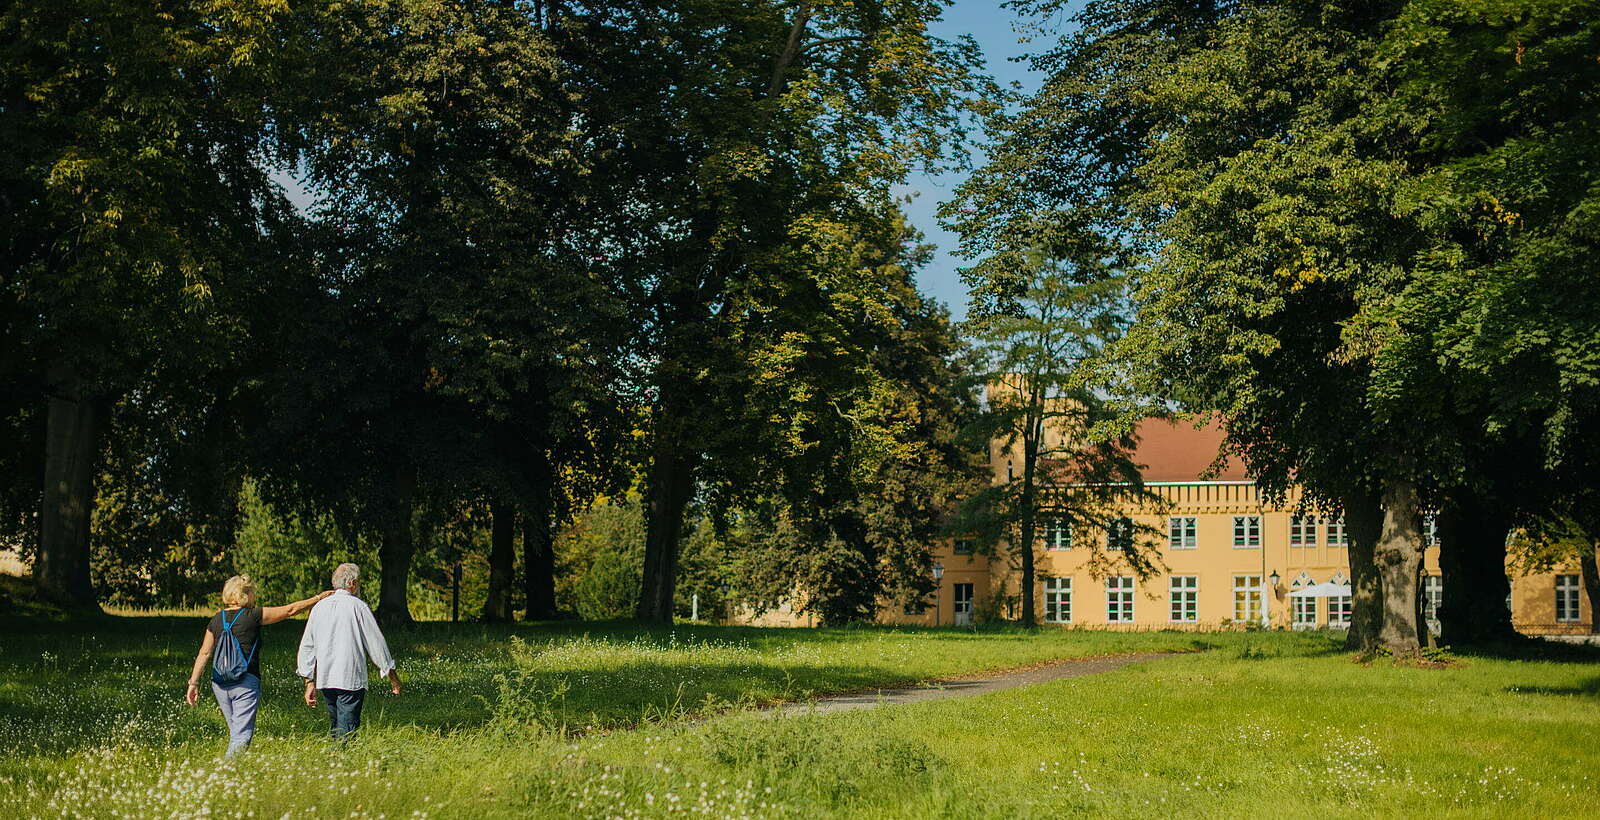 Spaziergang im Schlosspark Petzow,
        
    

        Foto: TMB-Fotoarchiv/Julia Nimke